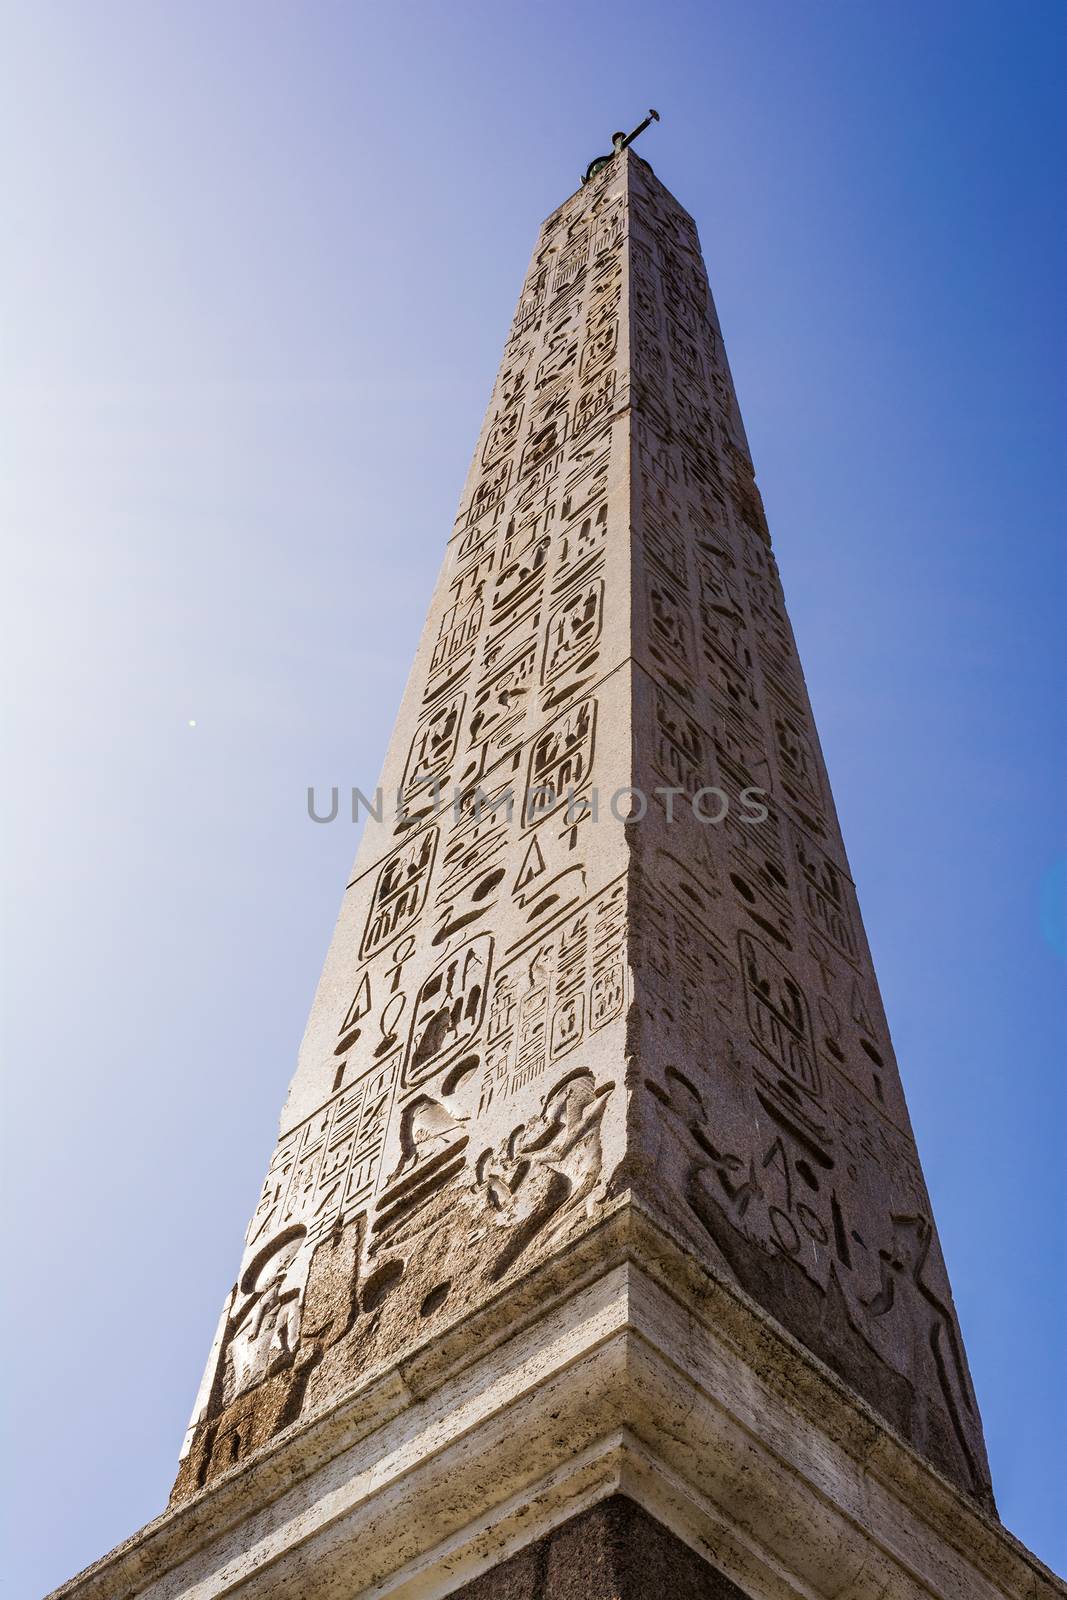 Egyptian Obelisk in Piazza del Popolo, Rome by ankarb